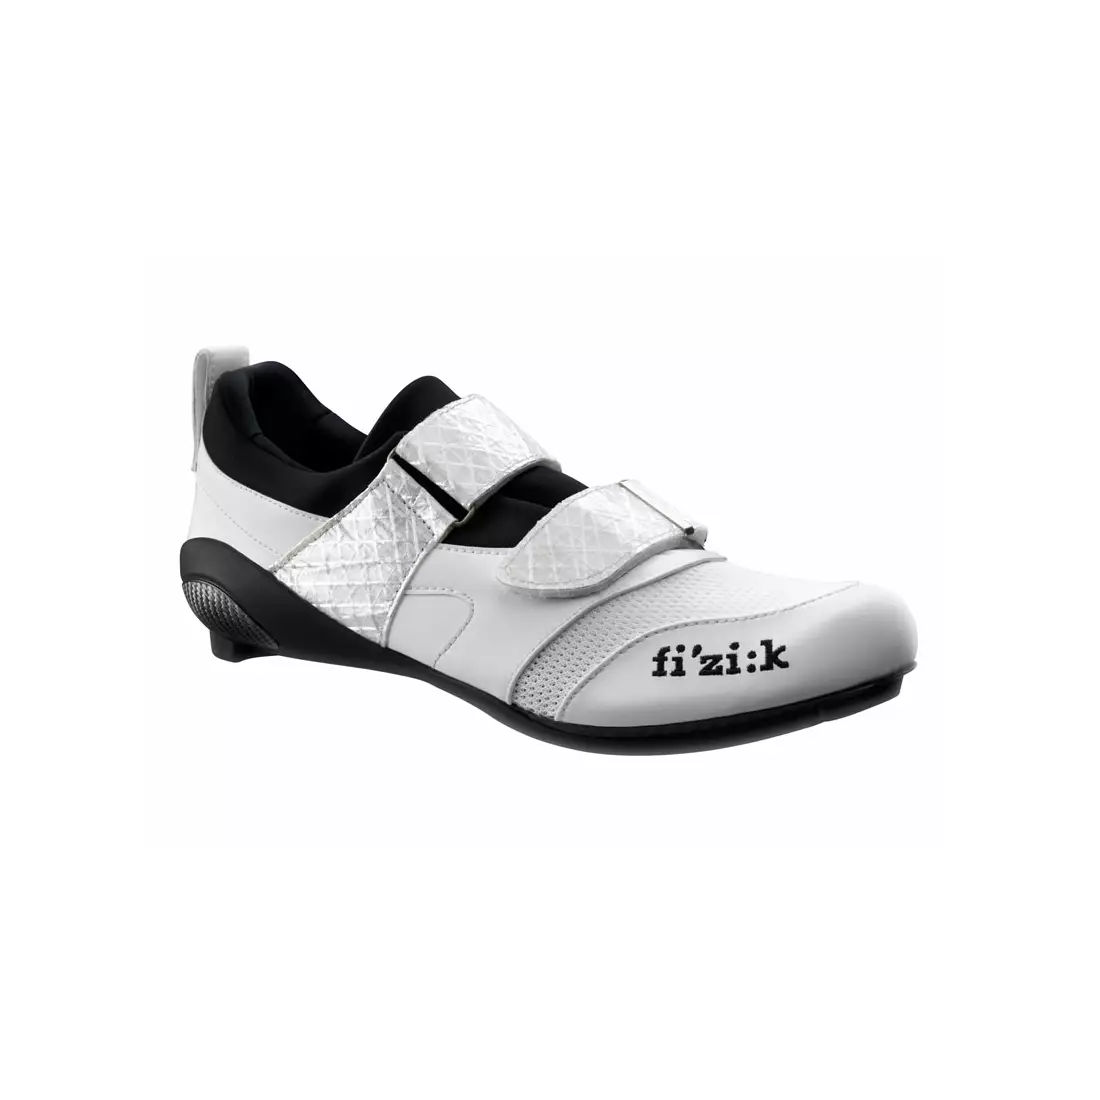 FIZIK K1 UOMO triathlon shoes White